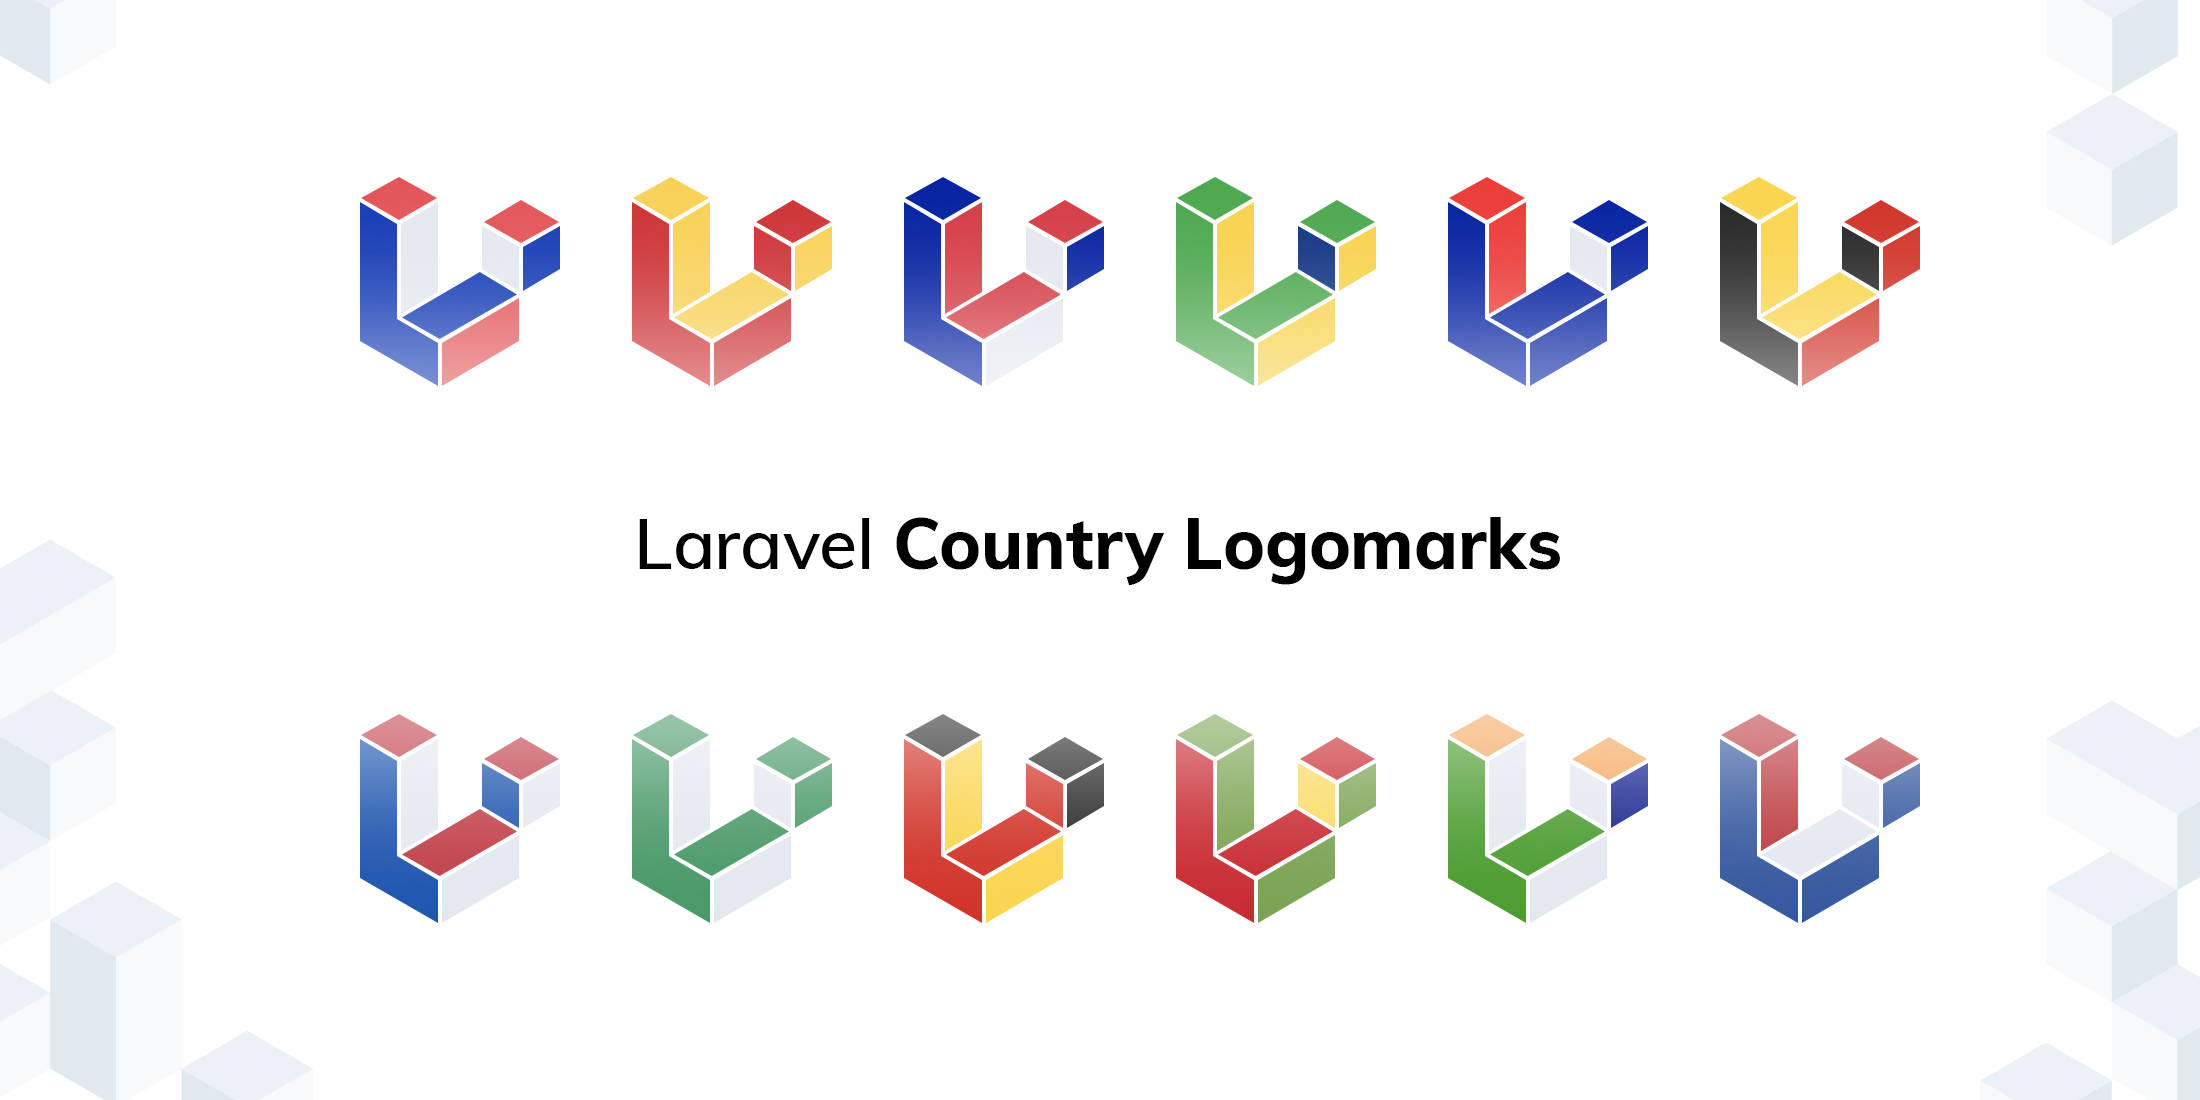 Presenting Laravel Country Logomarks image